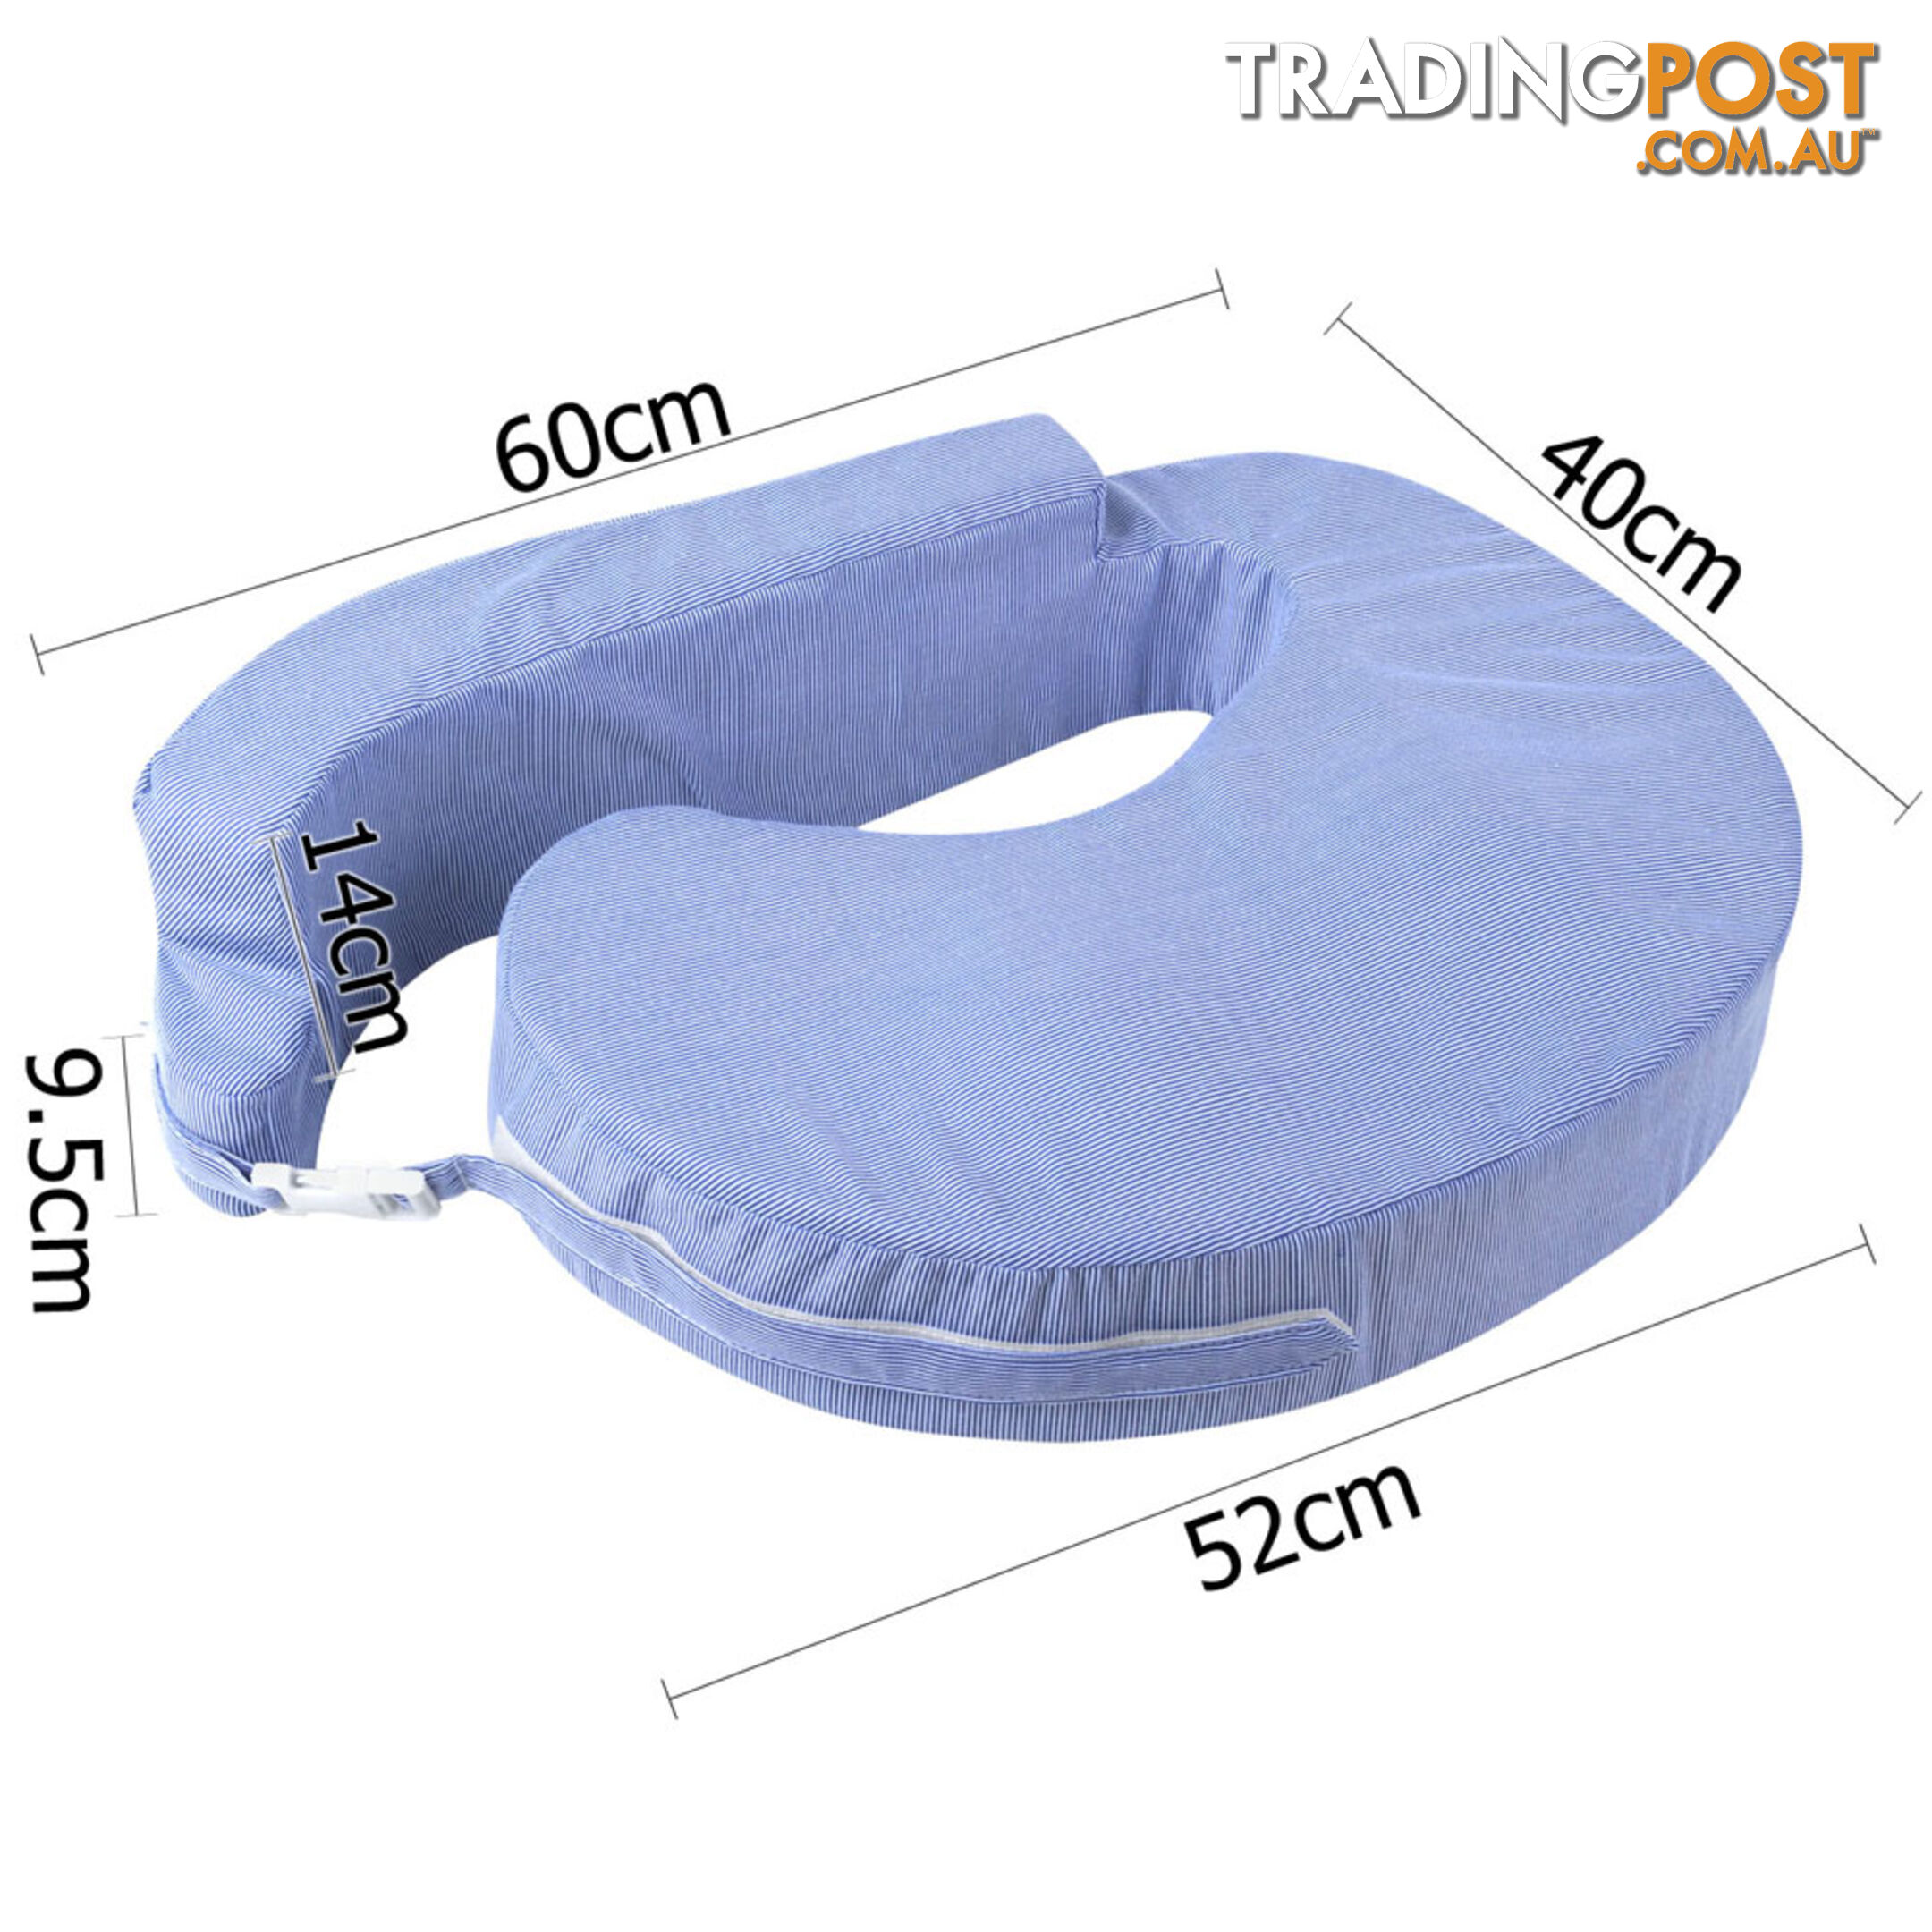 Baby Breast Feeding Support Memory Foam Breastfeeding Pillow Zip Cover Blue